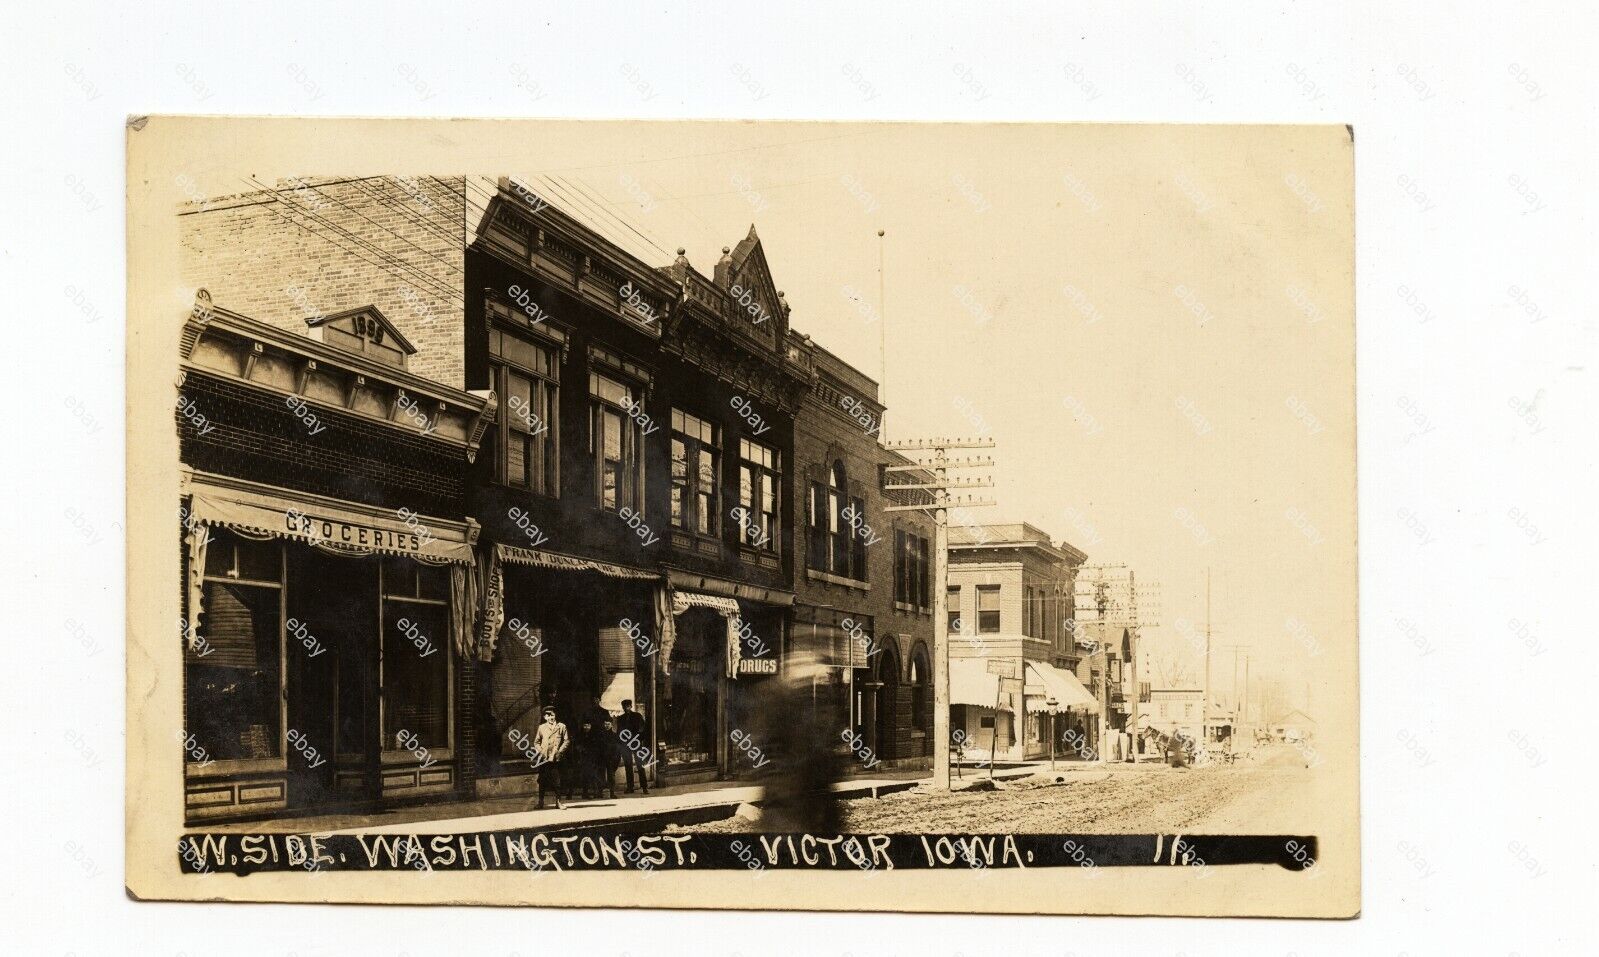 1910 STREET VIEW antique real photo postcard VICTOR, IA washington/rppc